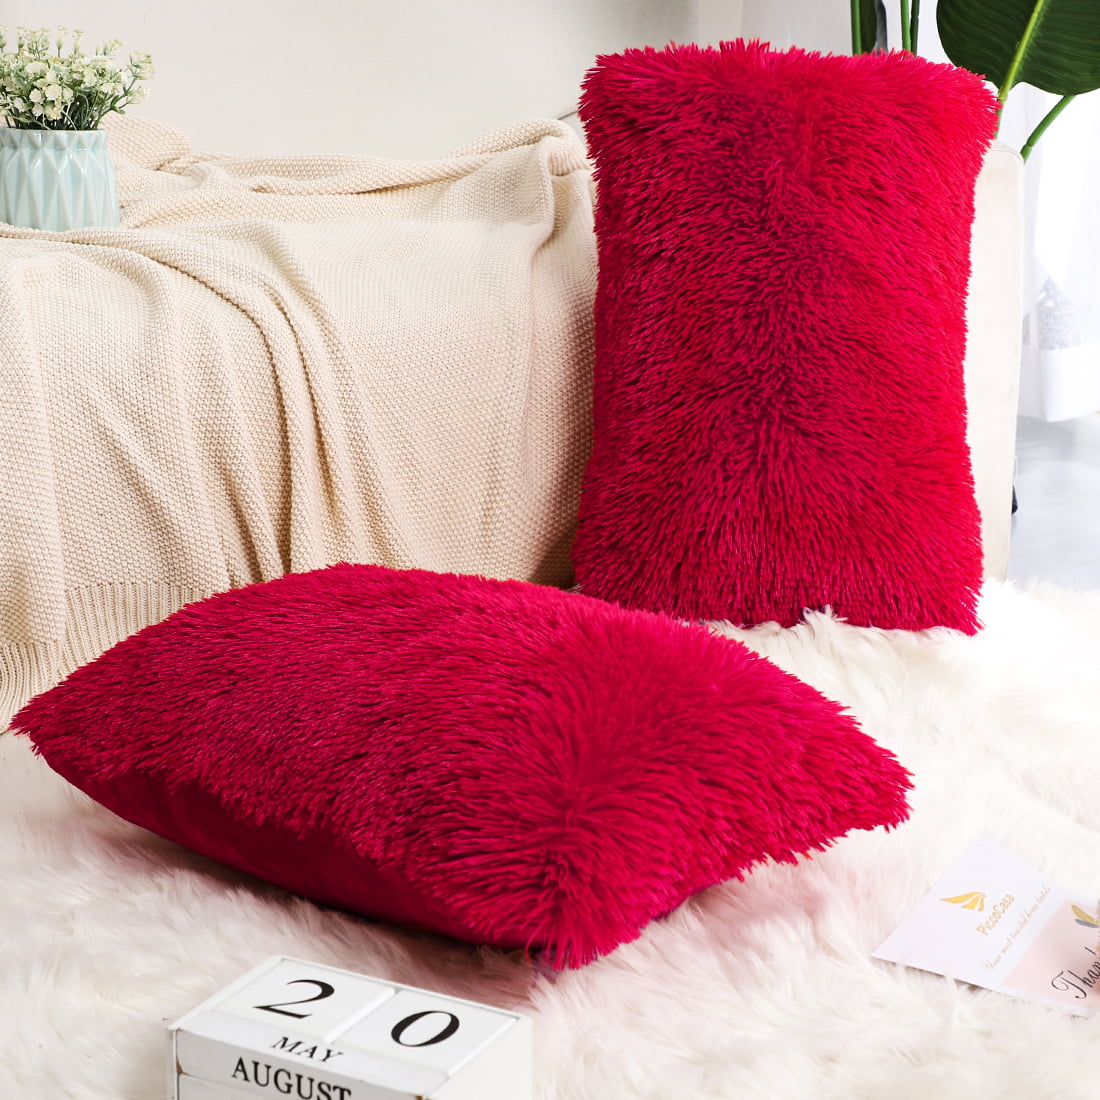 Details about   Faux Fur Fluffy Plush Throw Pillow Cases Shaggy Soft Chair Sofa Cushion Cover 